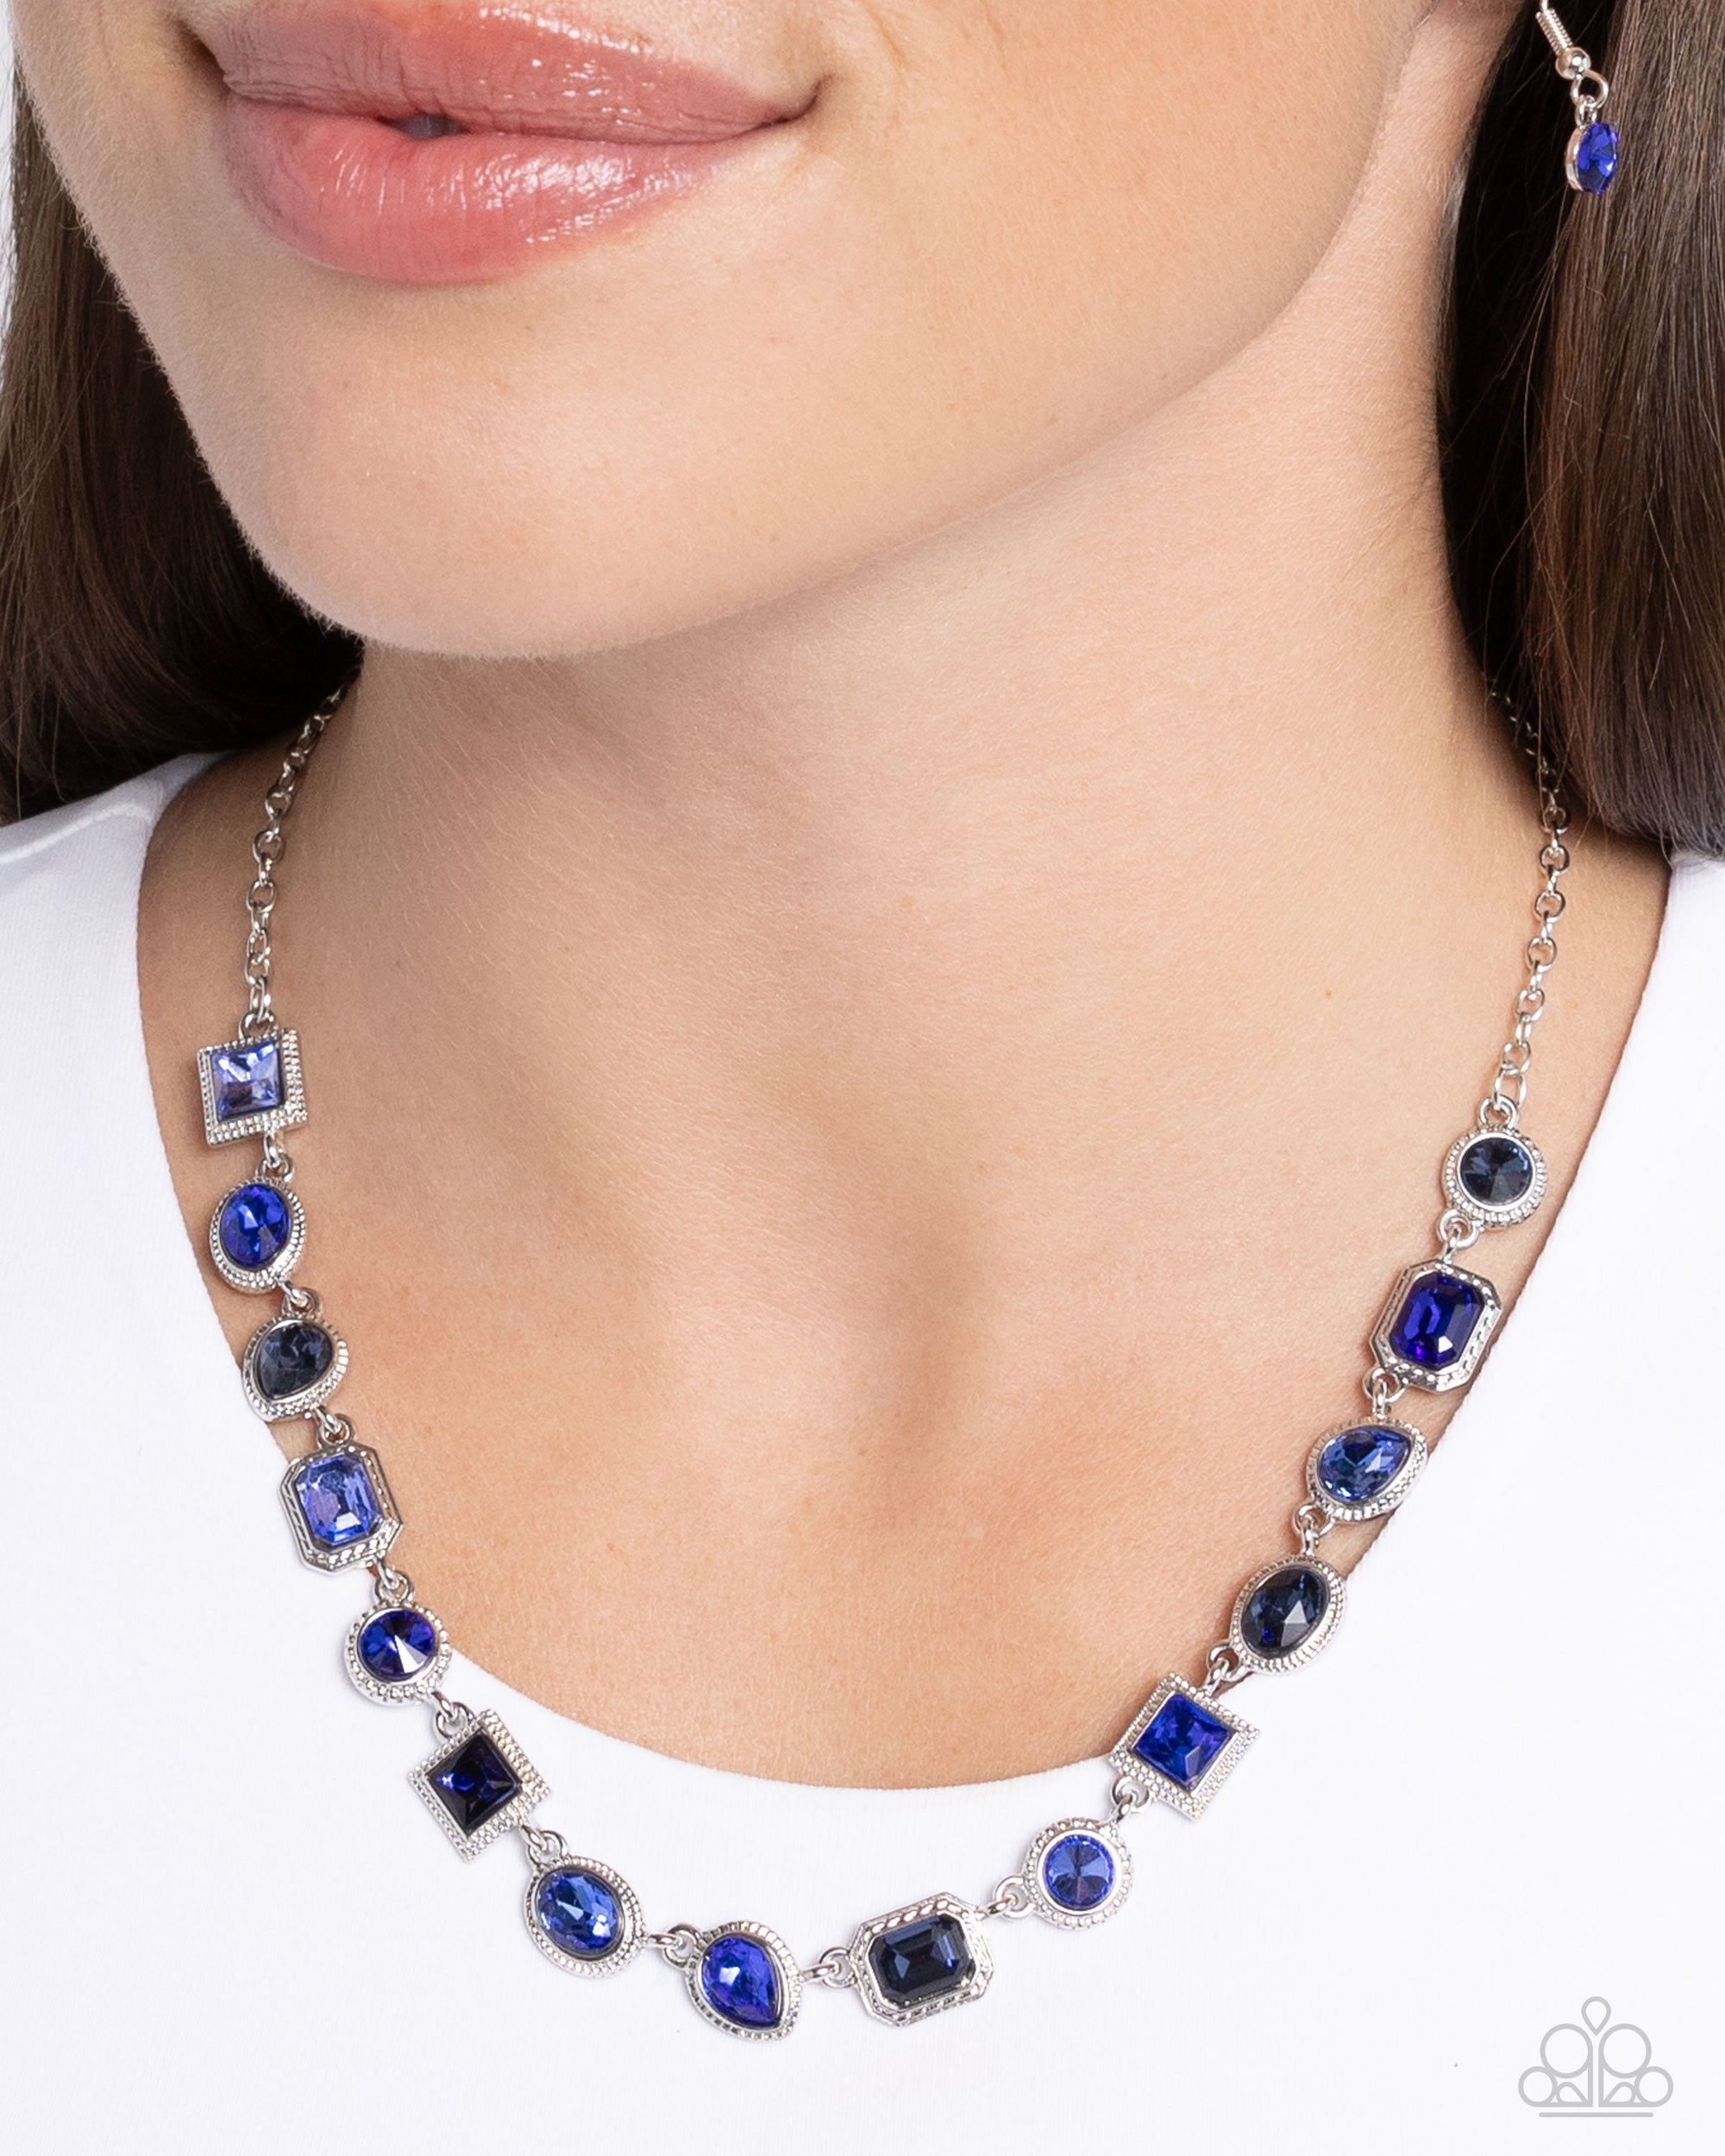 Gallery Glam Blue Rhinestone Necklace - Paparazzi Accessories- lightbox - CarasShop.com - $5 Jewelry by Cara Jewels